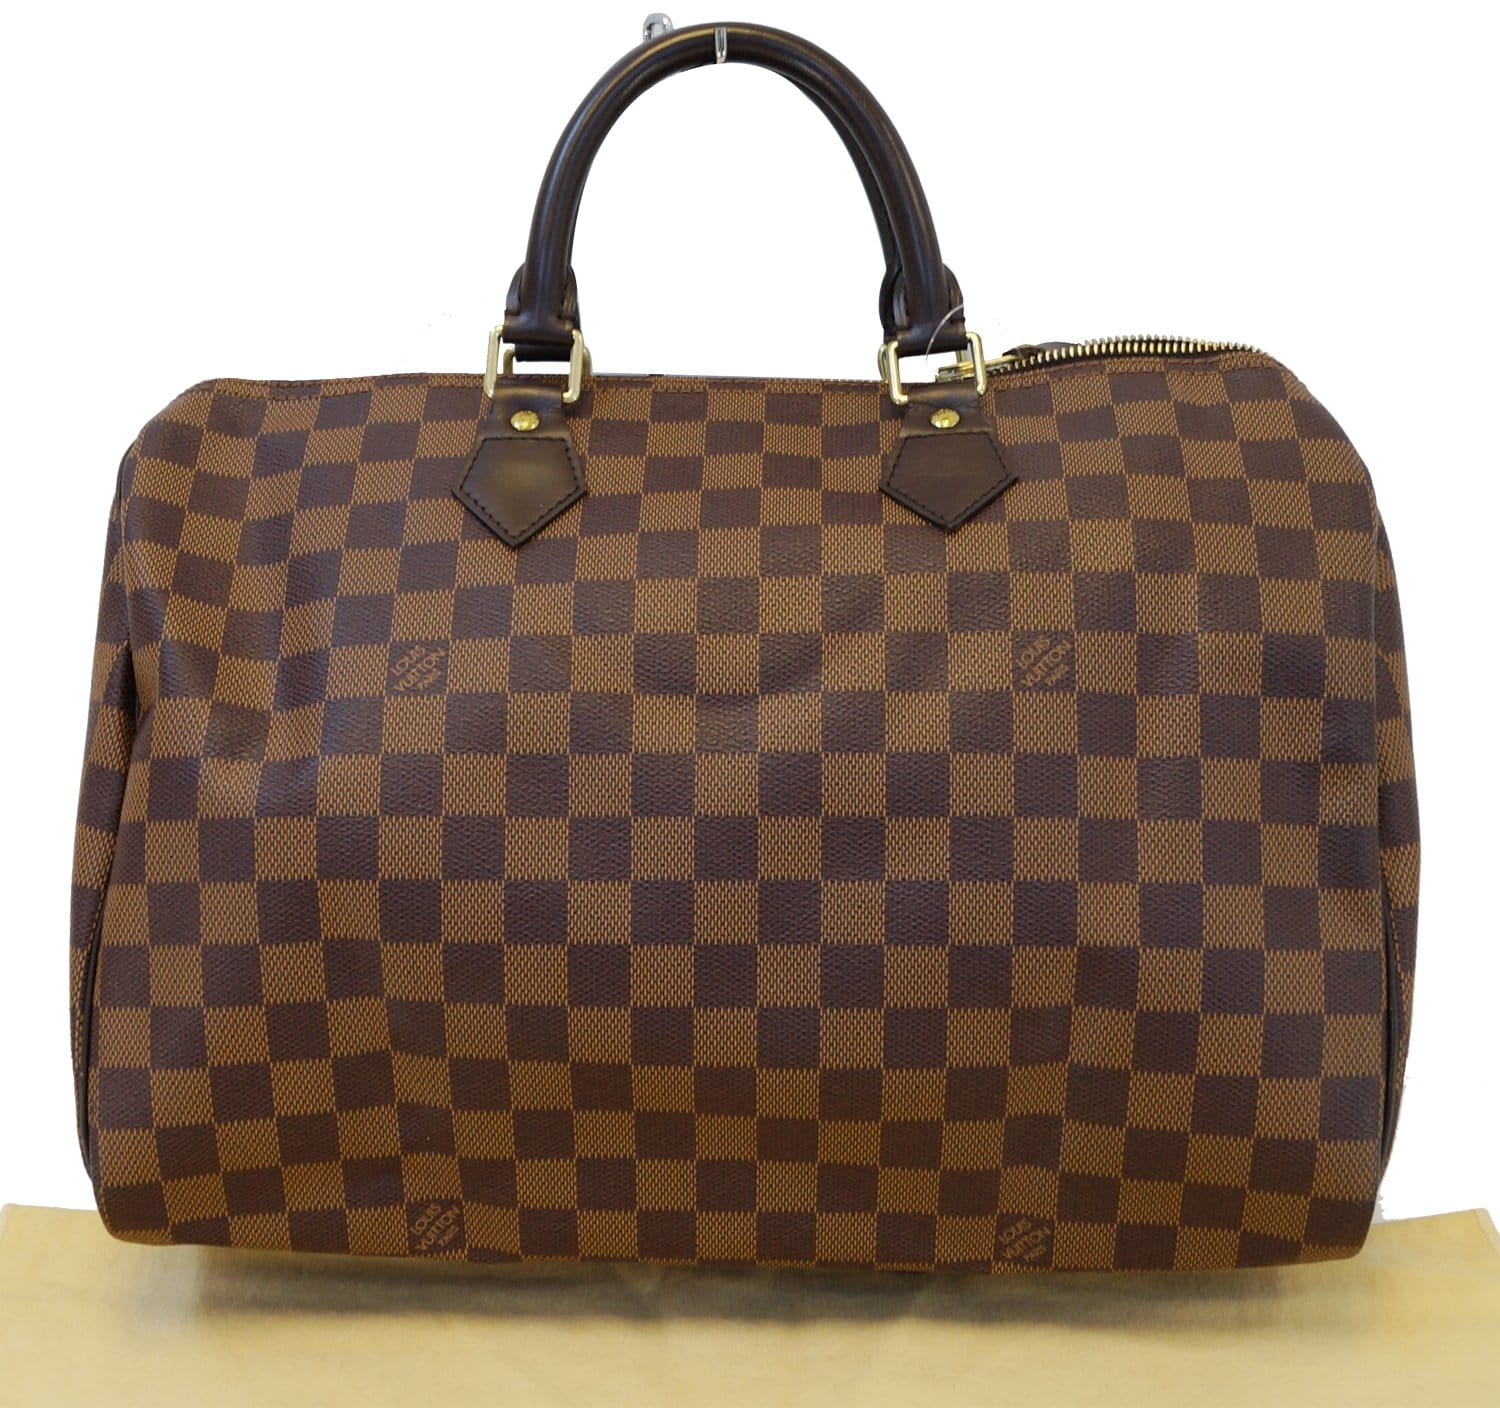 Authentic LOUIS VUITTON Damier Ebene Speedy 35 Handbag E3156